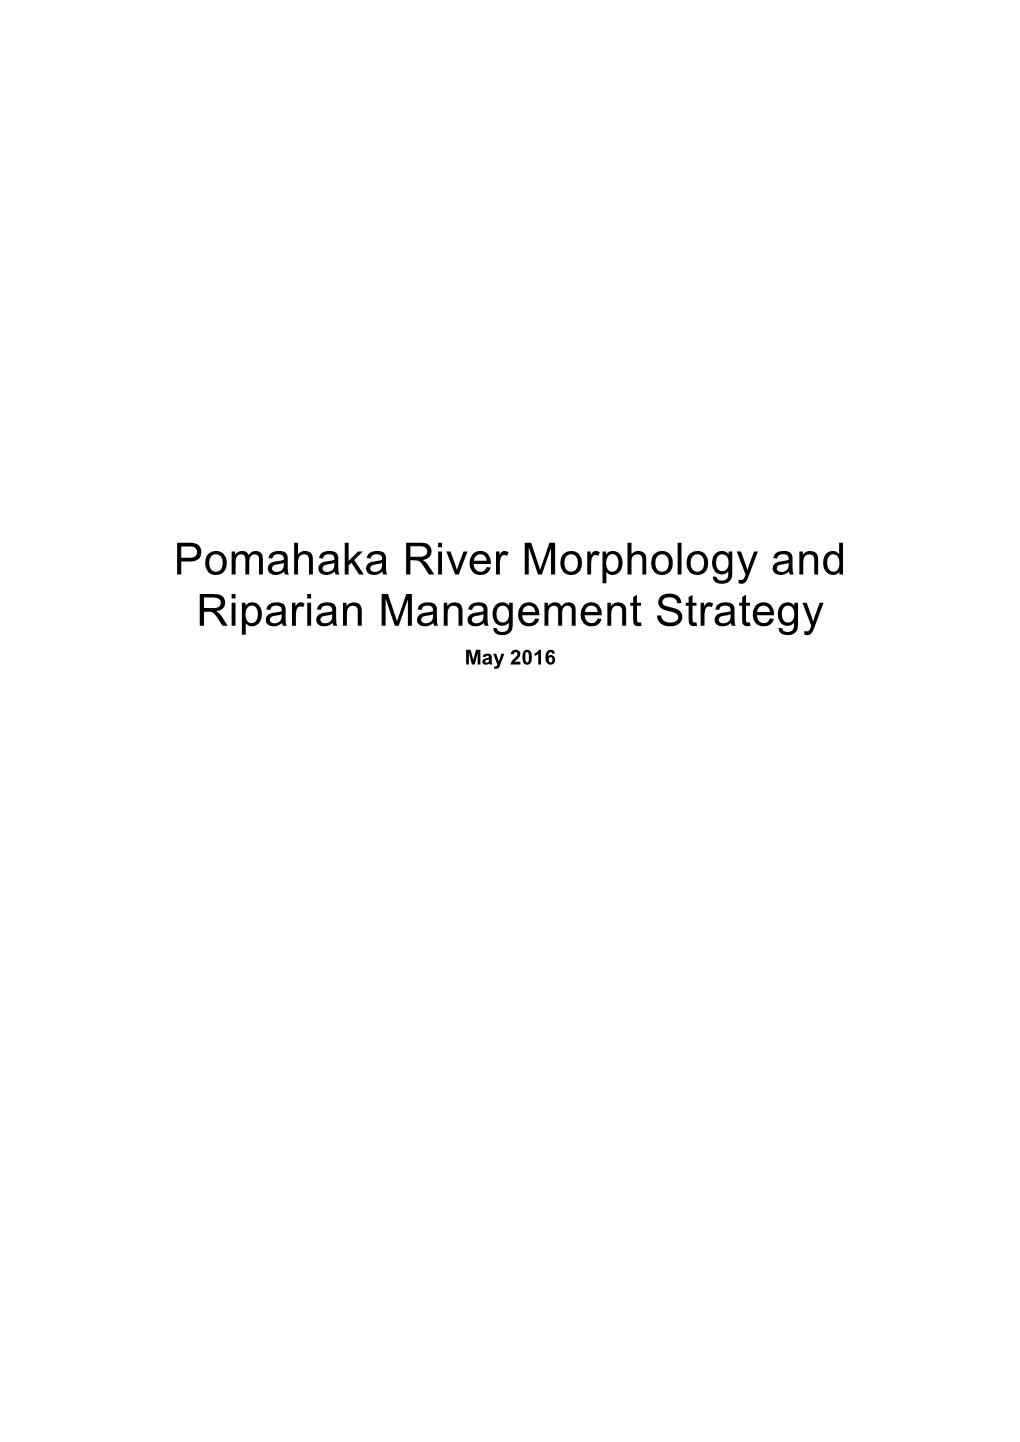 Pomahaka River Morphology and Riparian Management Strategy May 2016